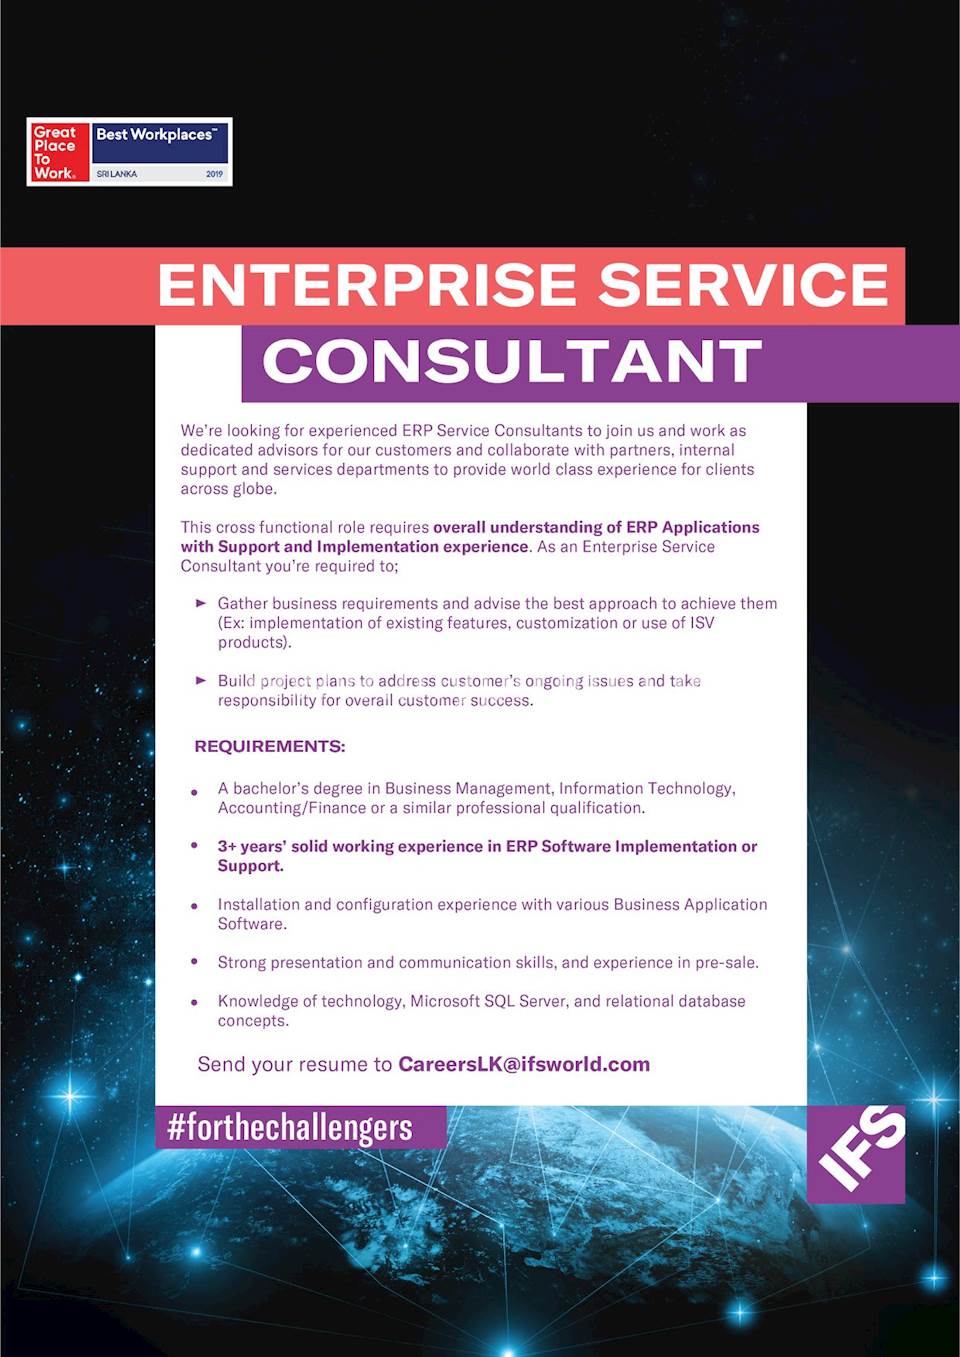 Enterprise Service - Consultant